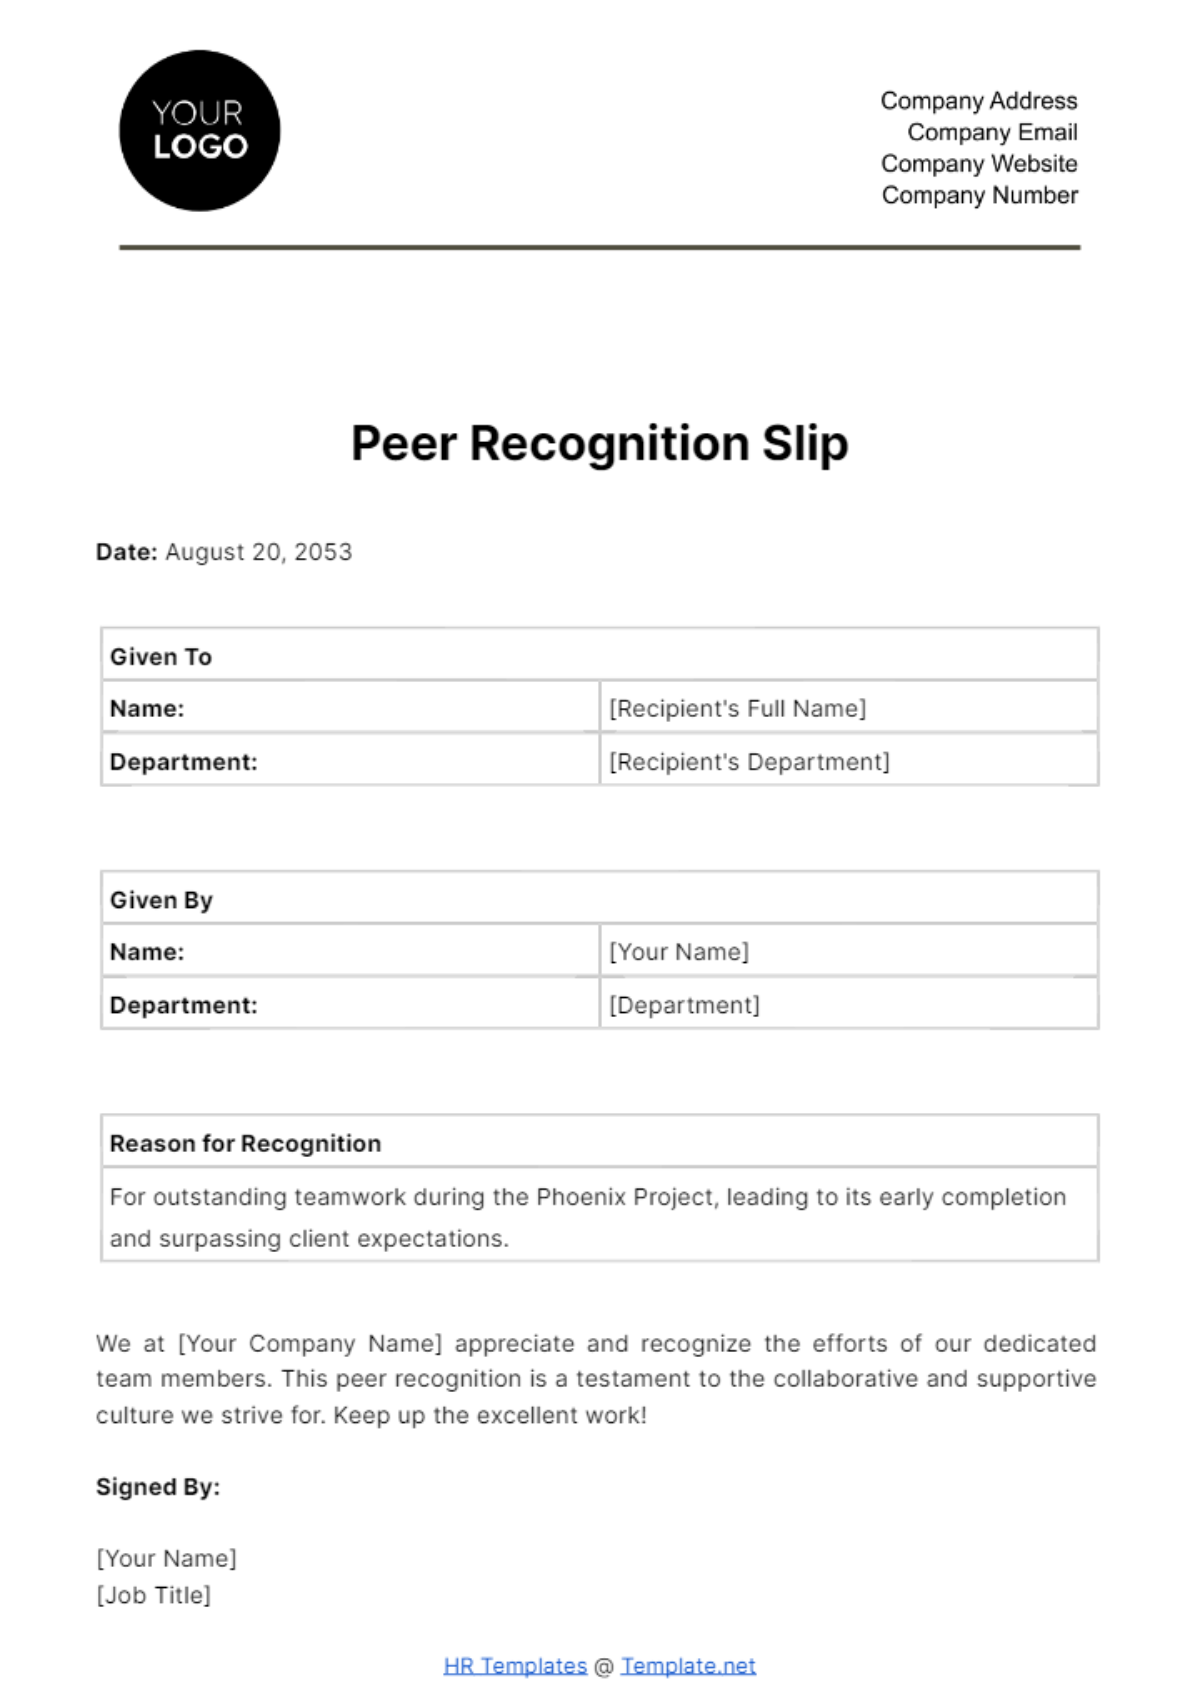 Peer Recognition Slip HR Template